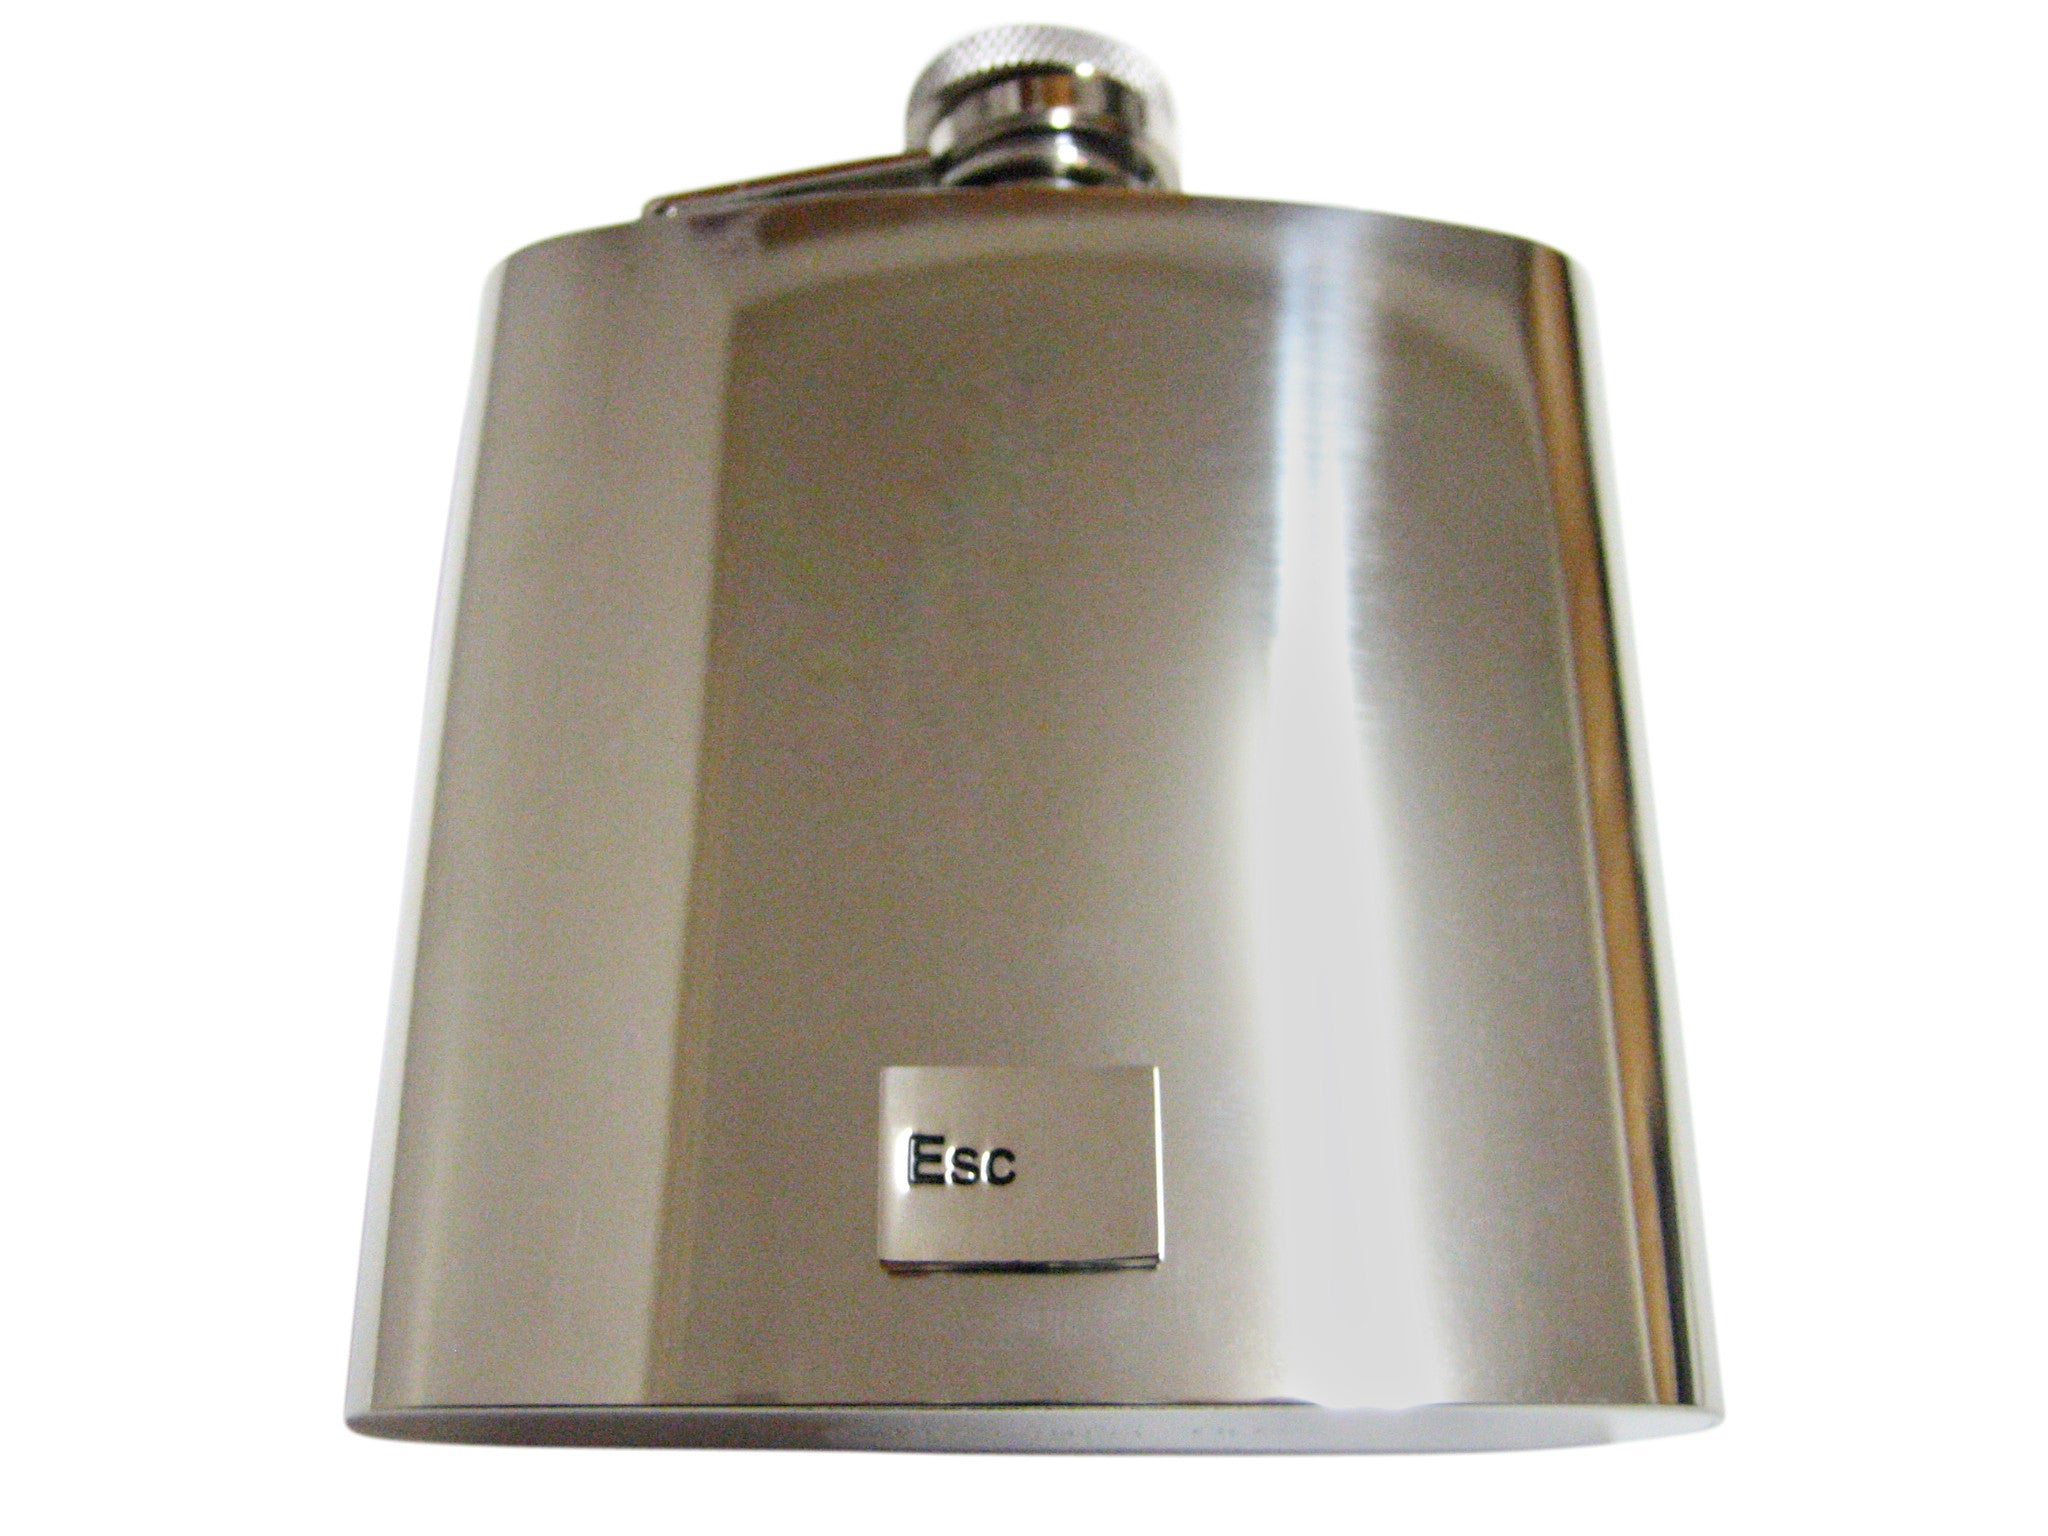 Esc Key 6 Oz. Stainless Steel Flask